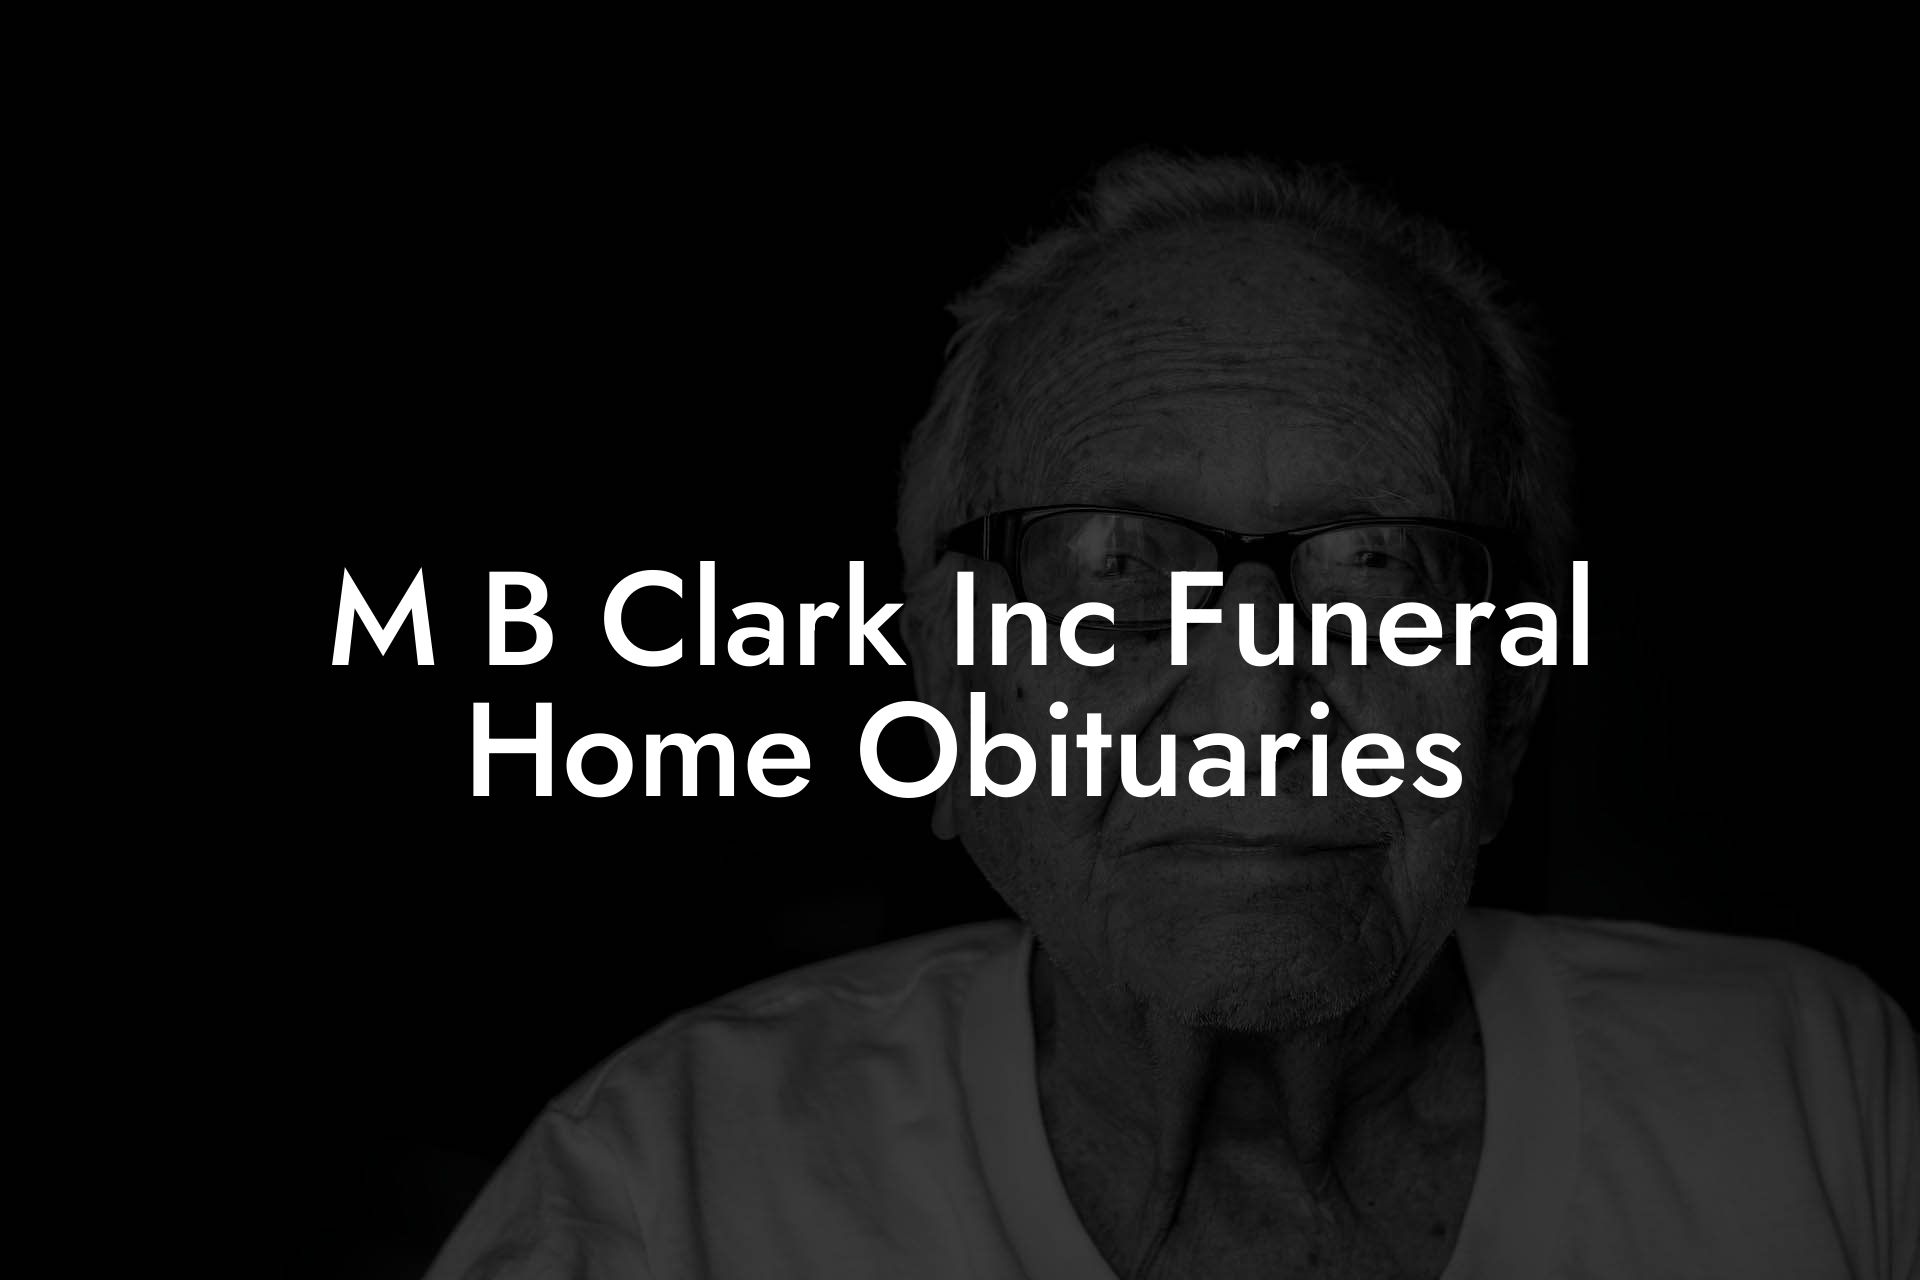 M B Clark Inc Funeral Home Obituaries